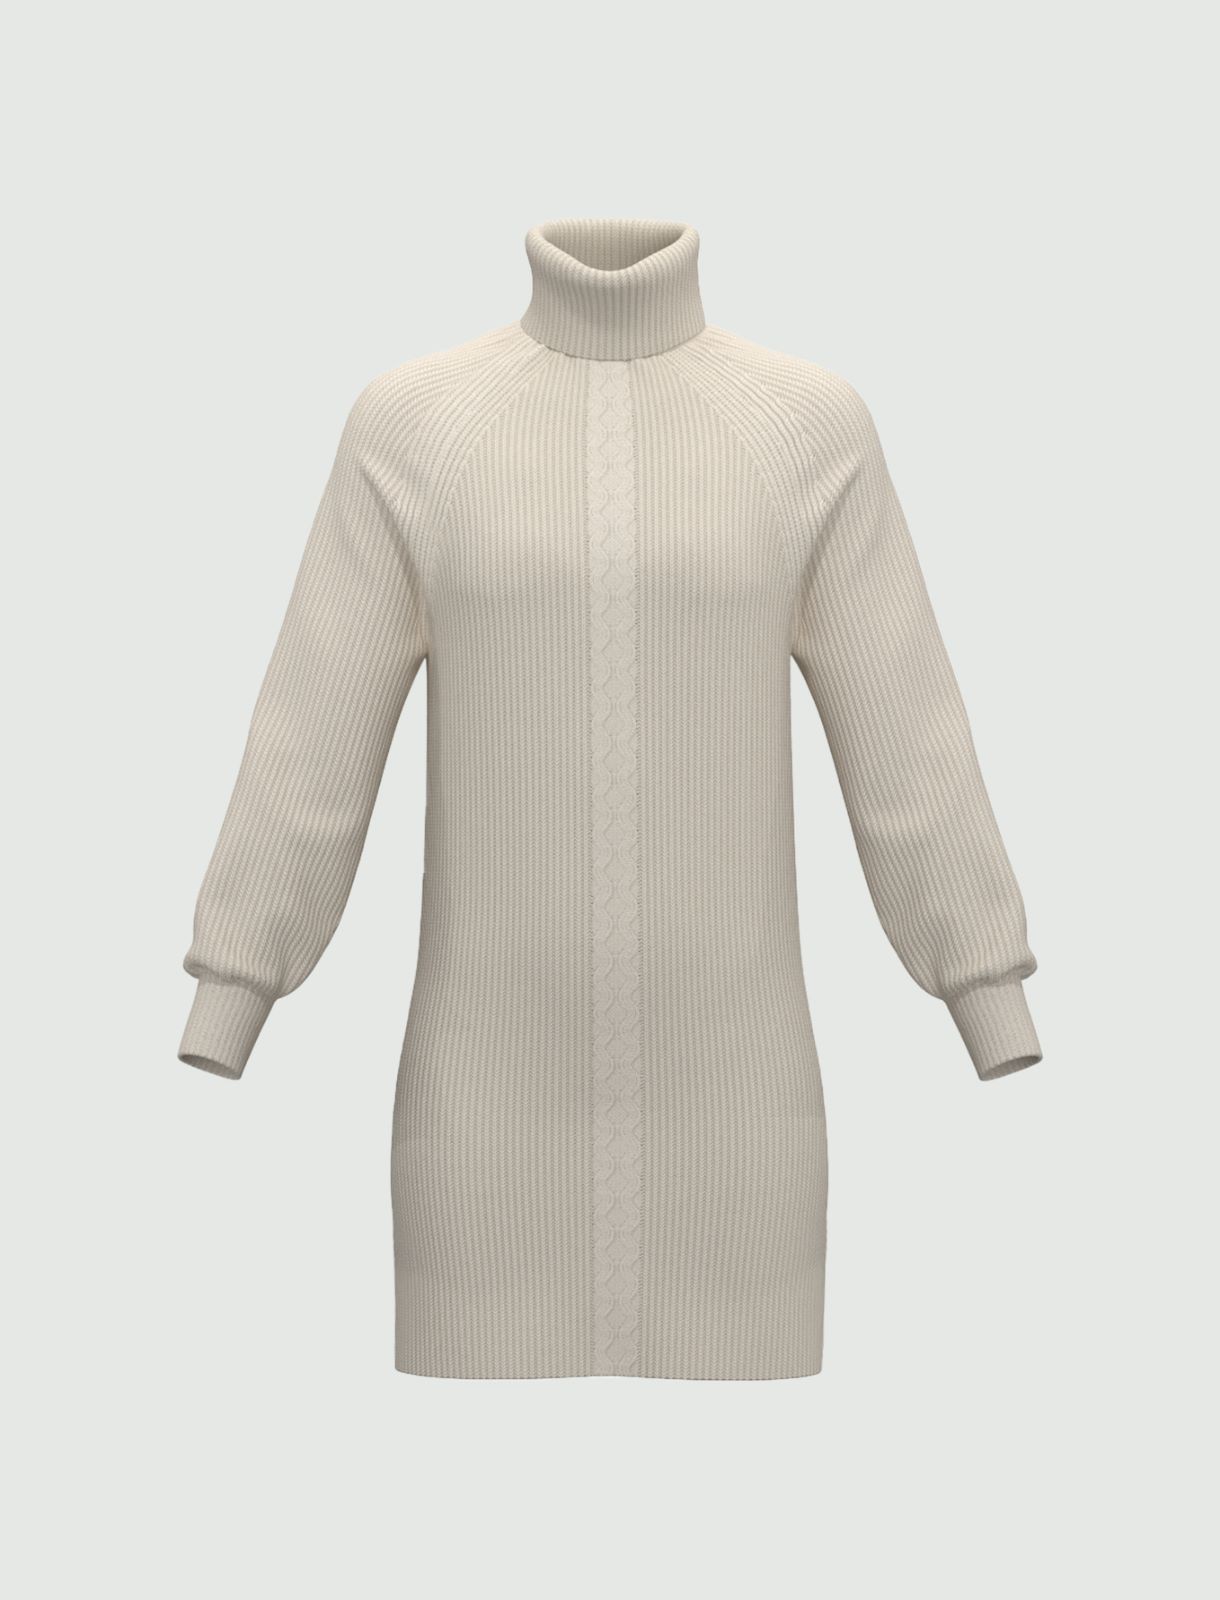 Knit dress - White - Marella - 4